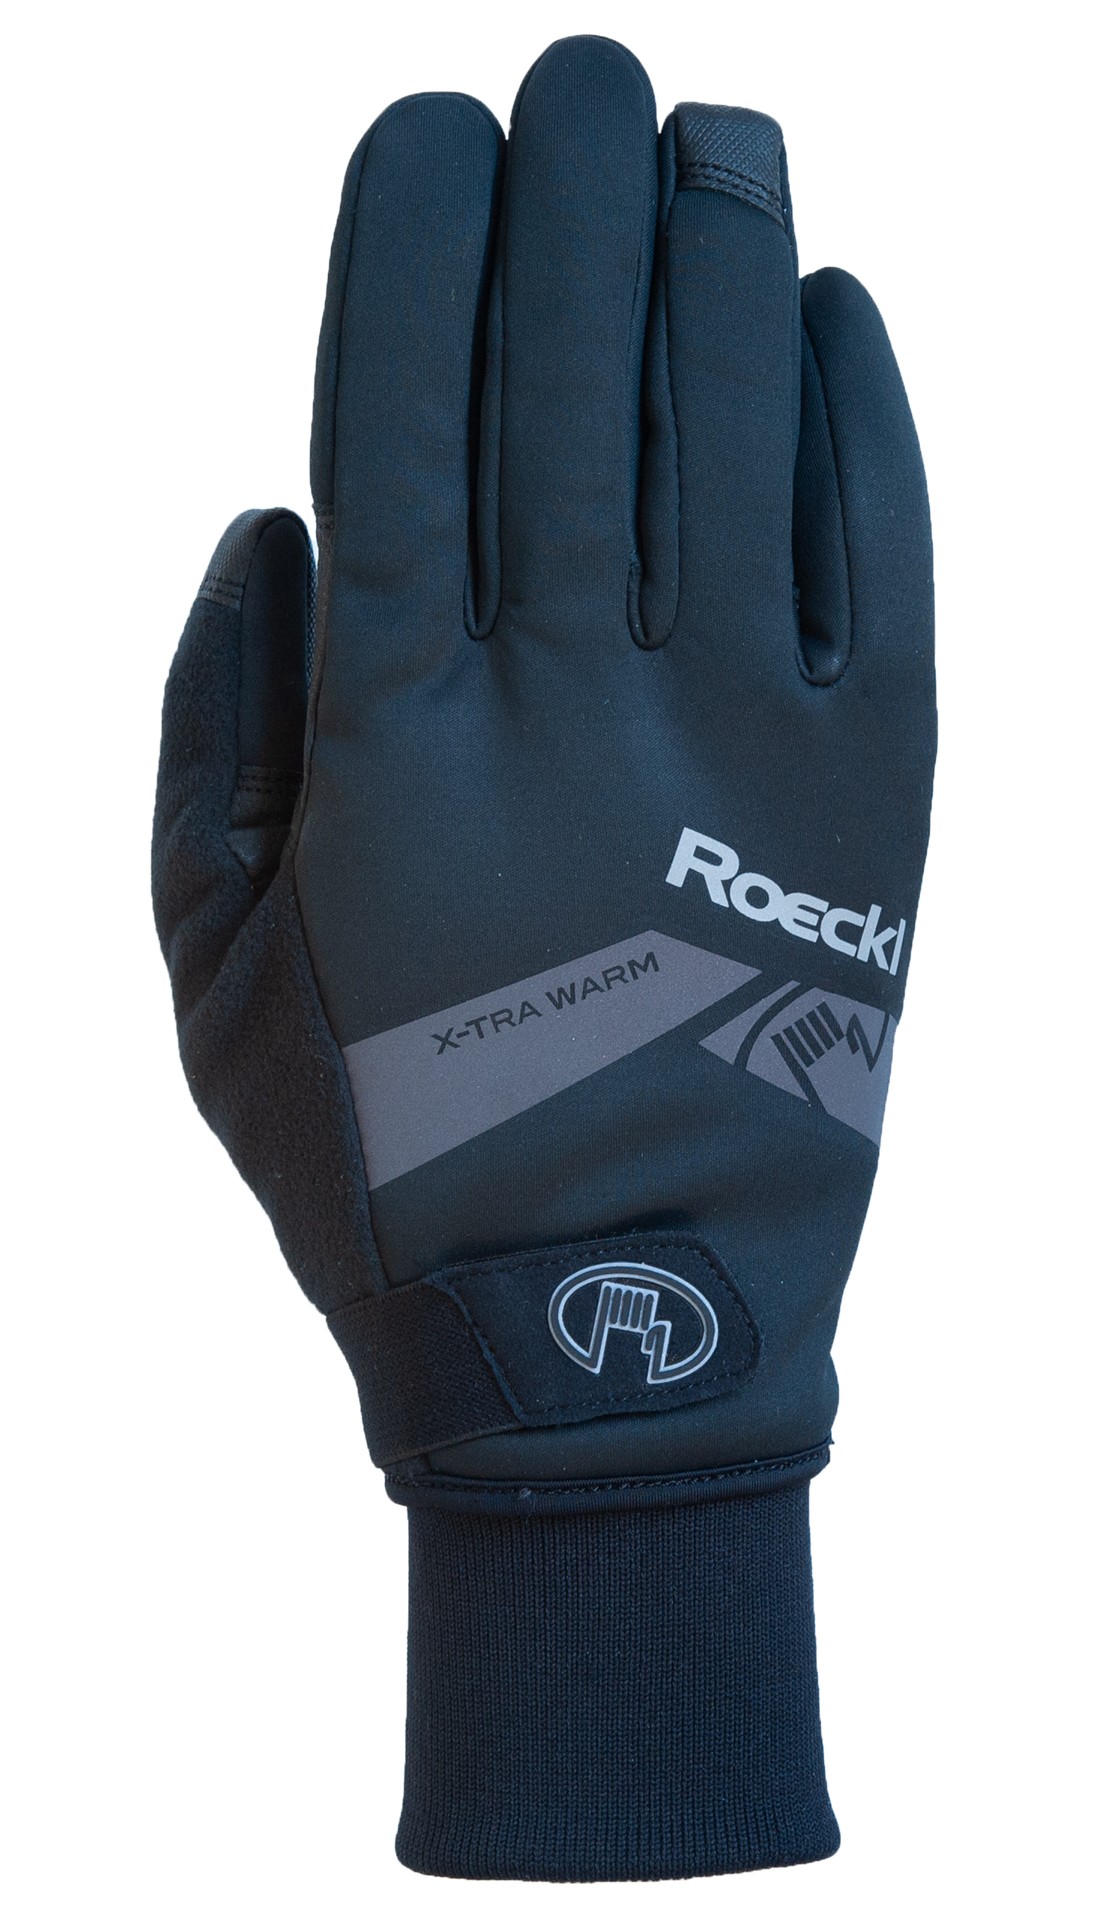 Roeckl villach gants de cyclisme noir